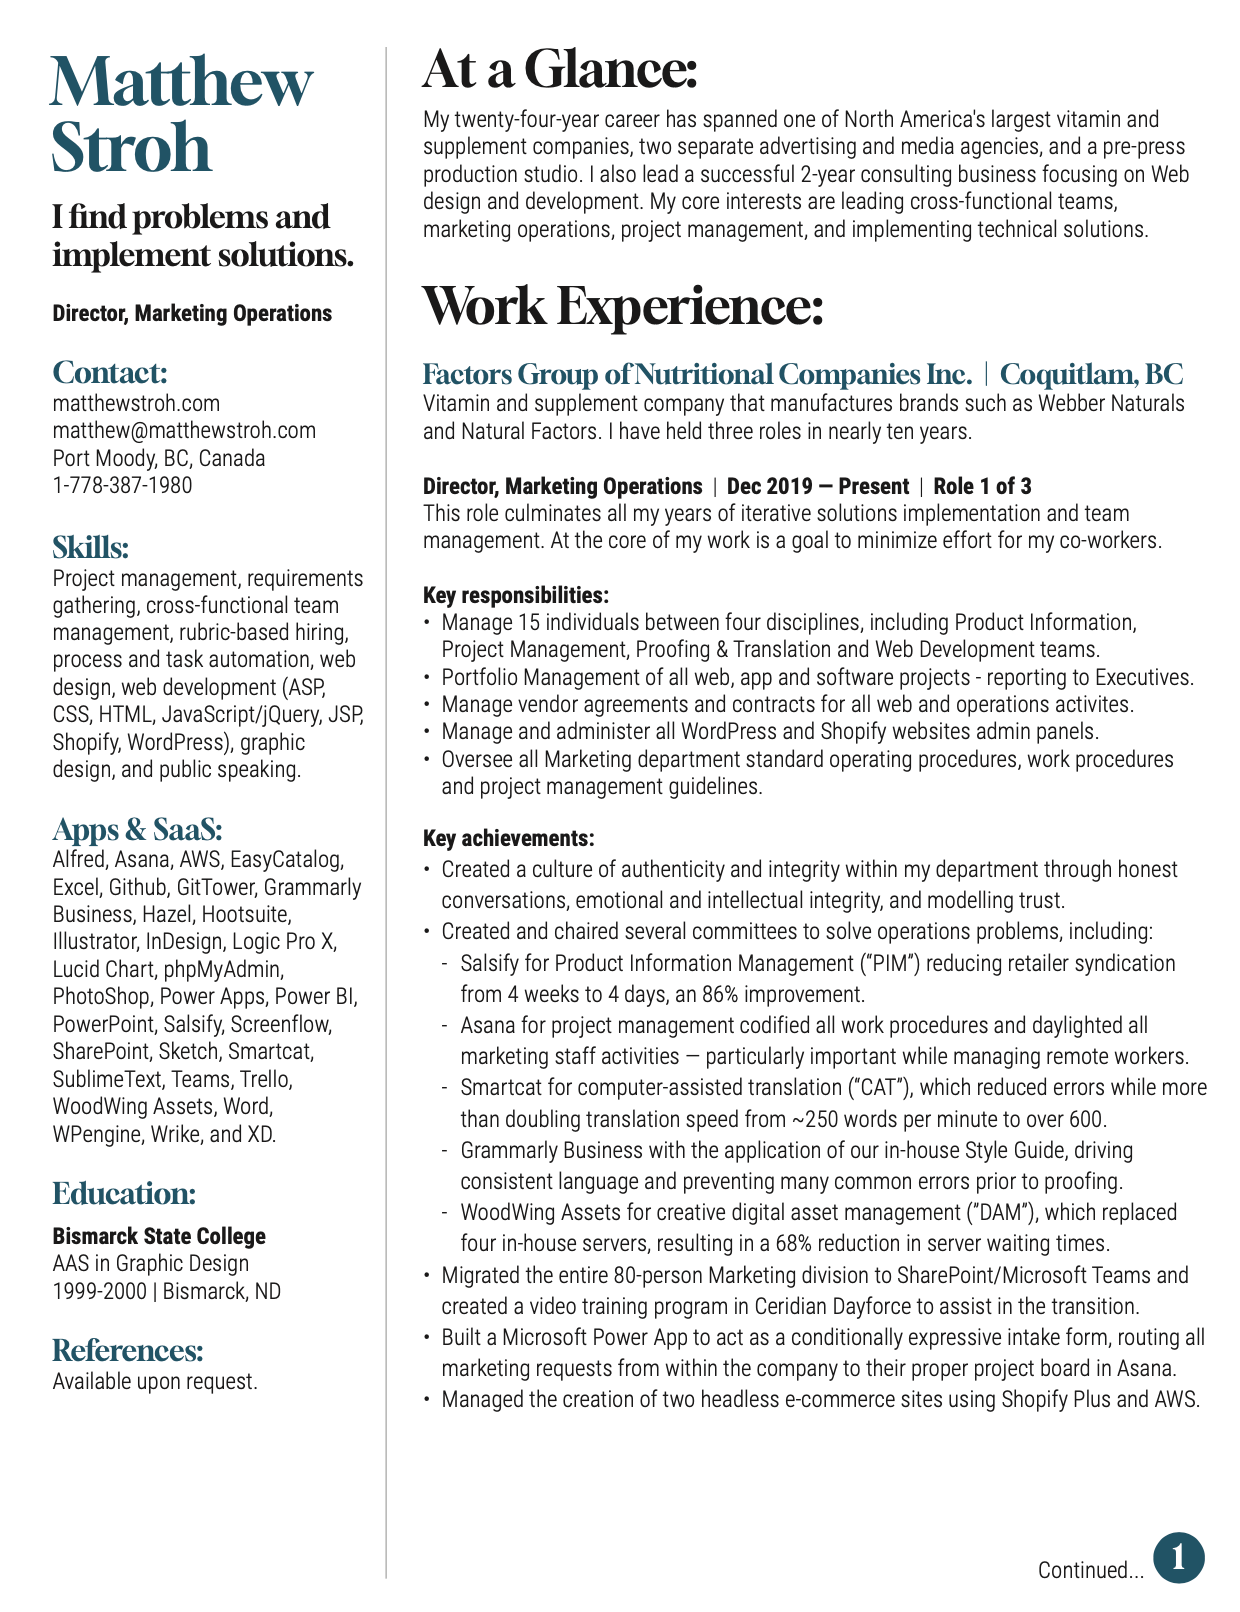 Download Matthew Stroh's 2-page Resume